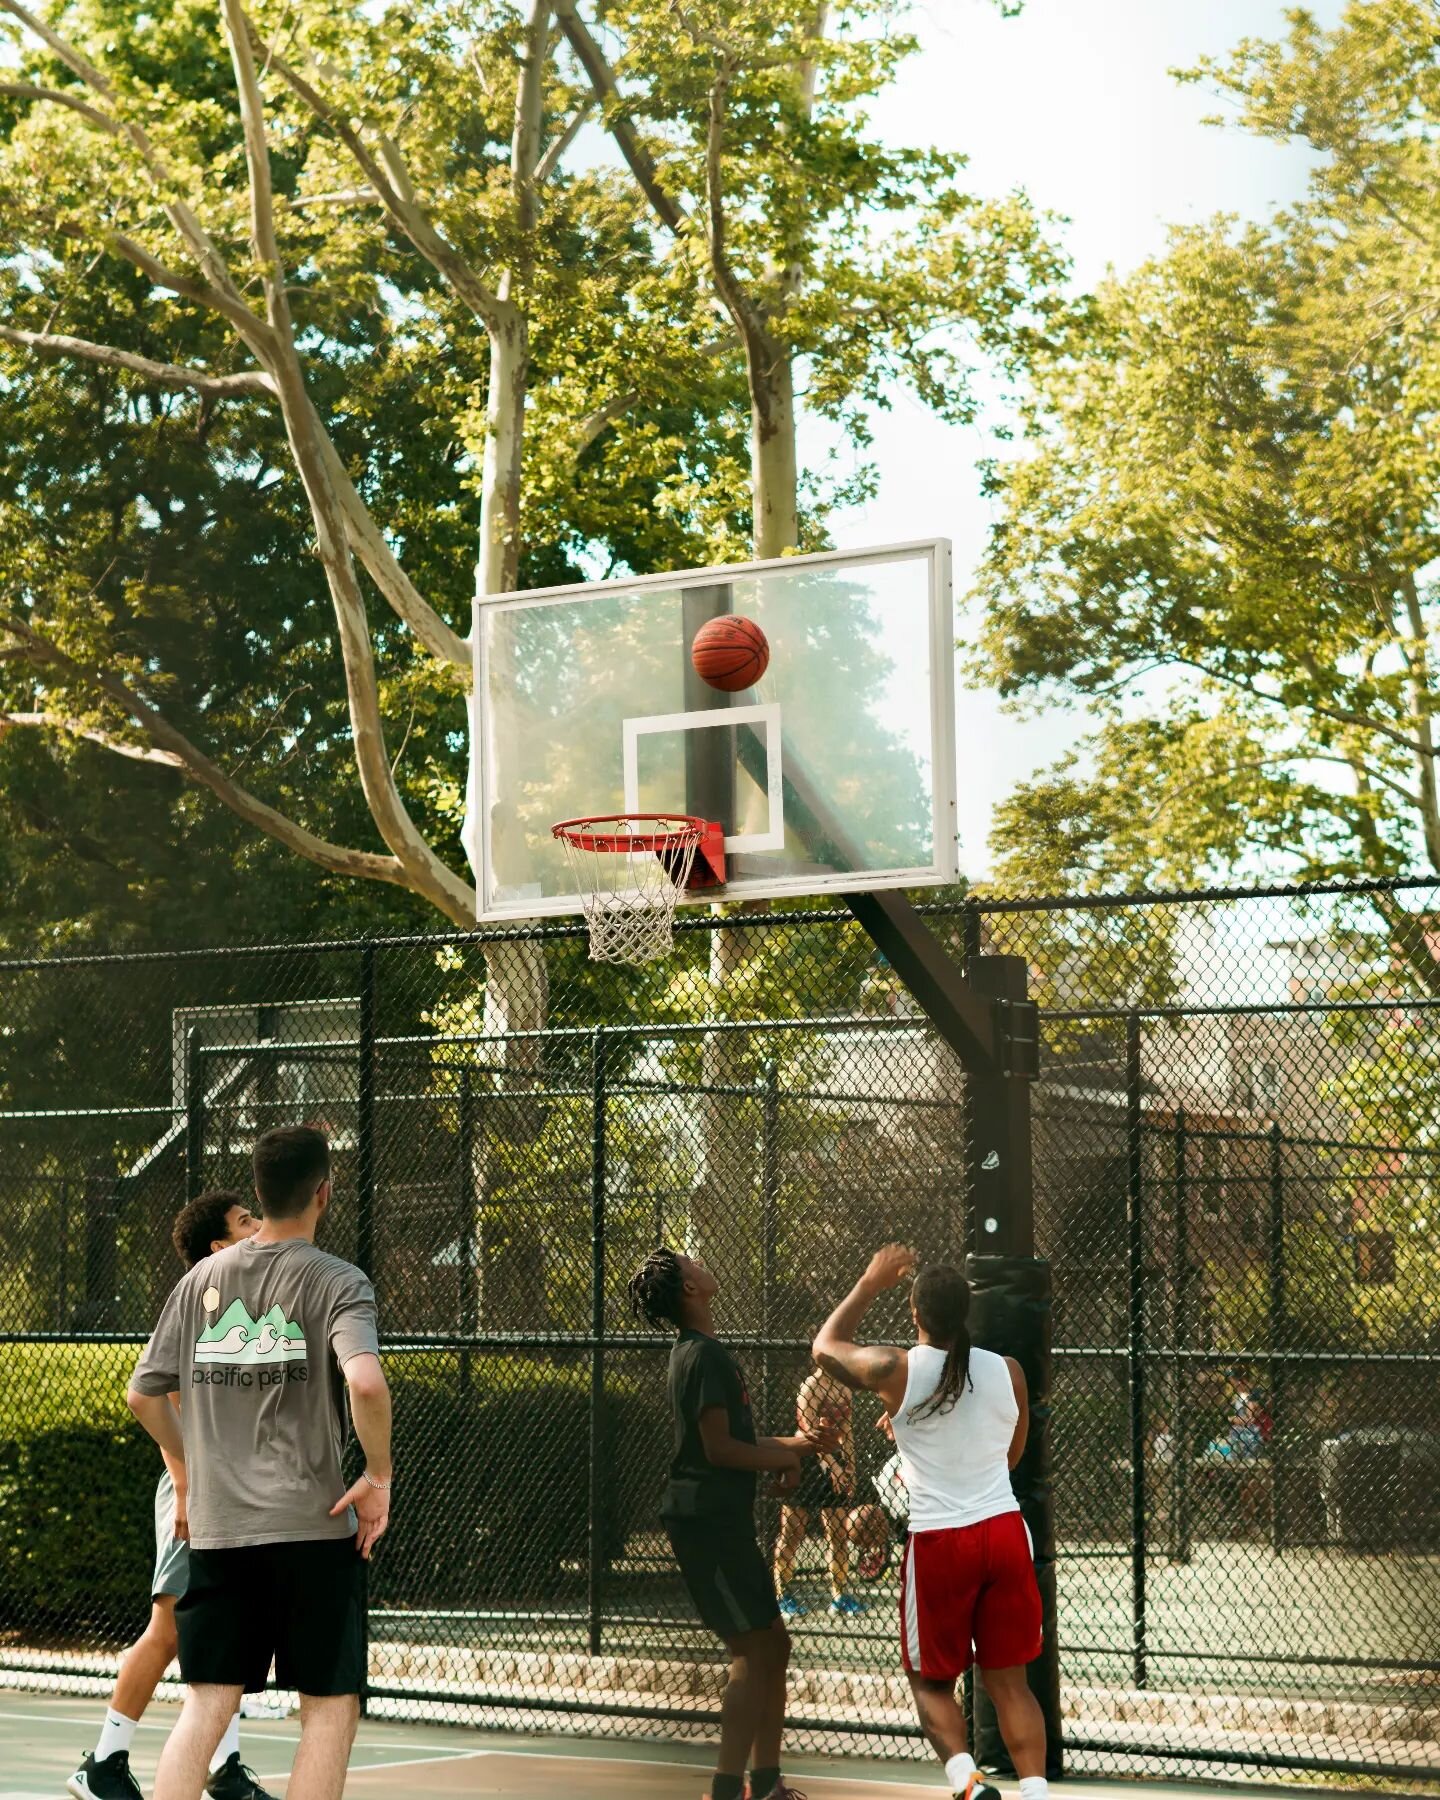 Summer days 😄! They are going  away so fast.
#jerseycity #basketball #jerseycityparks #explorerjourney #adobelightroom #sonyalpha #streetphotography